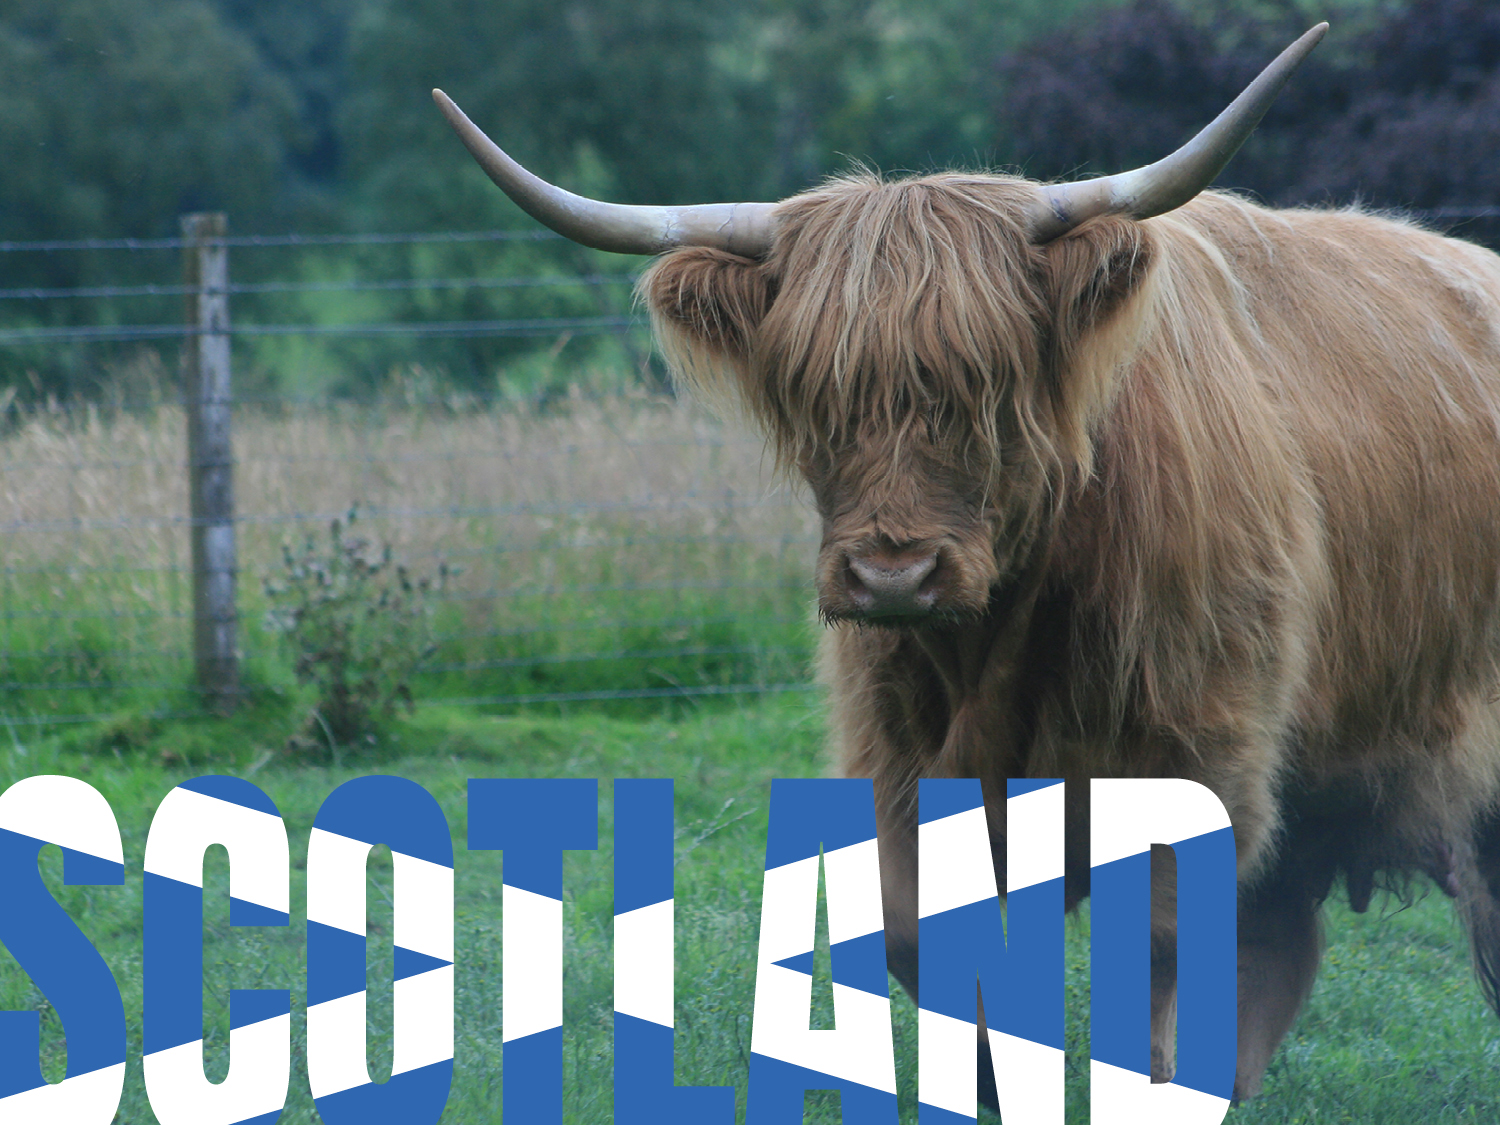 Scotland image of highland cow